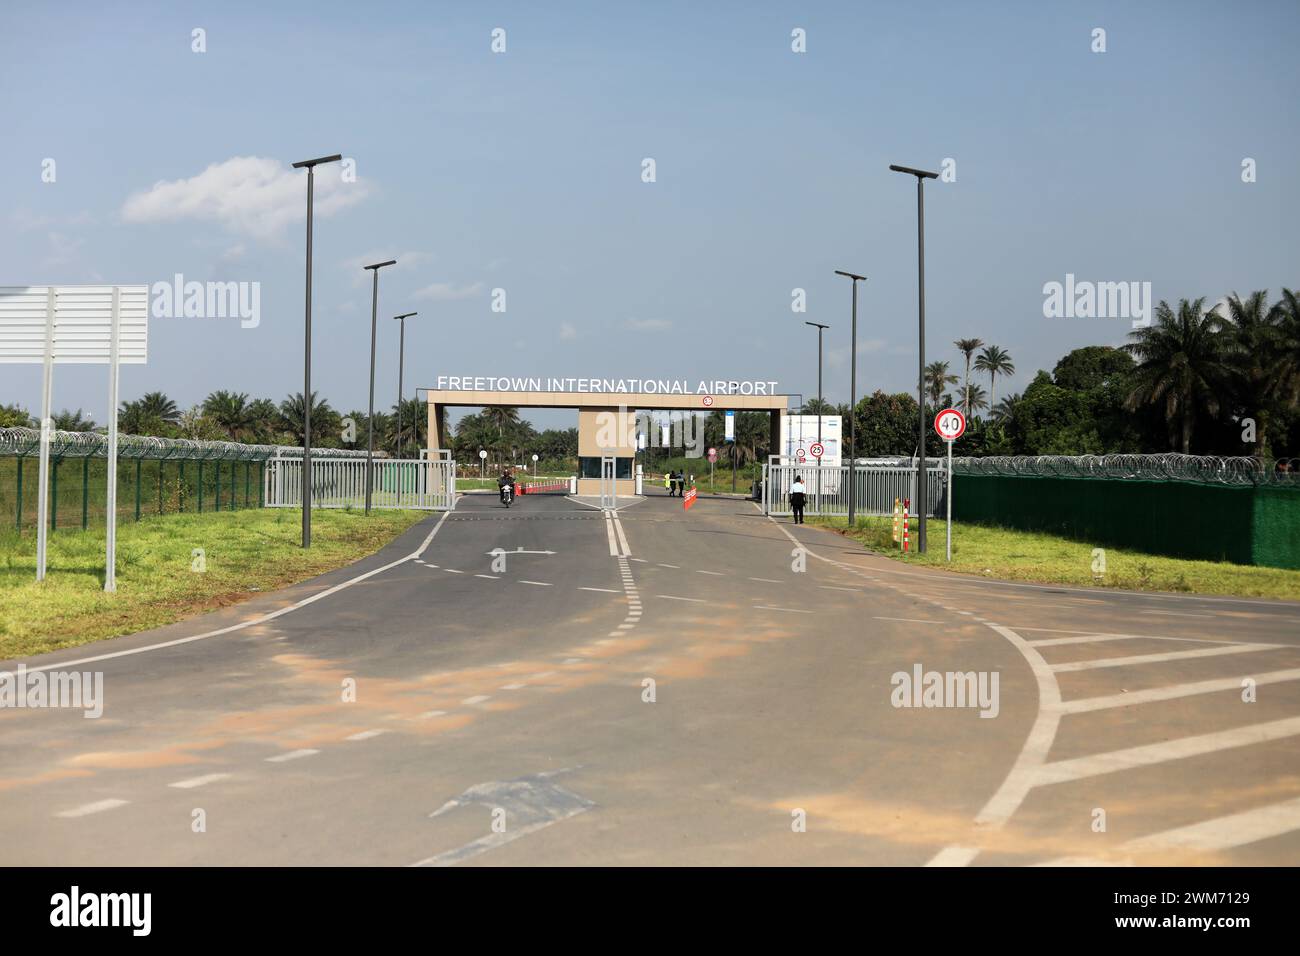 General view of Freetown International Airport, Freetown, Sierra Leone, Africa. Stock Photo